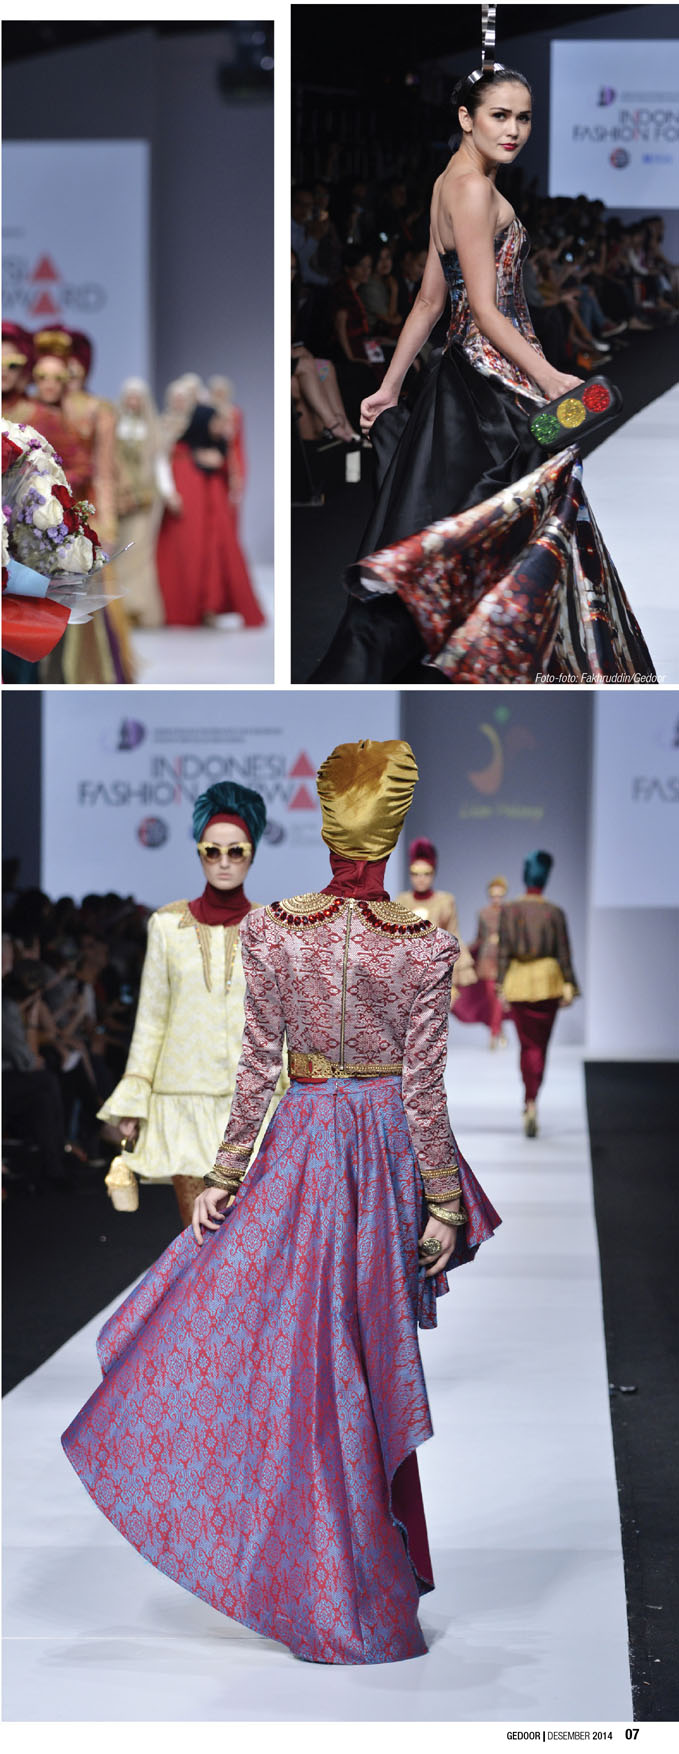 Pekan Mode Jakarta Fashion Week 2014